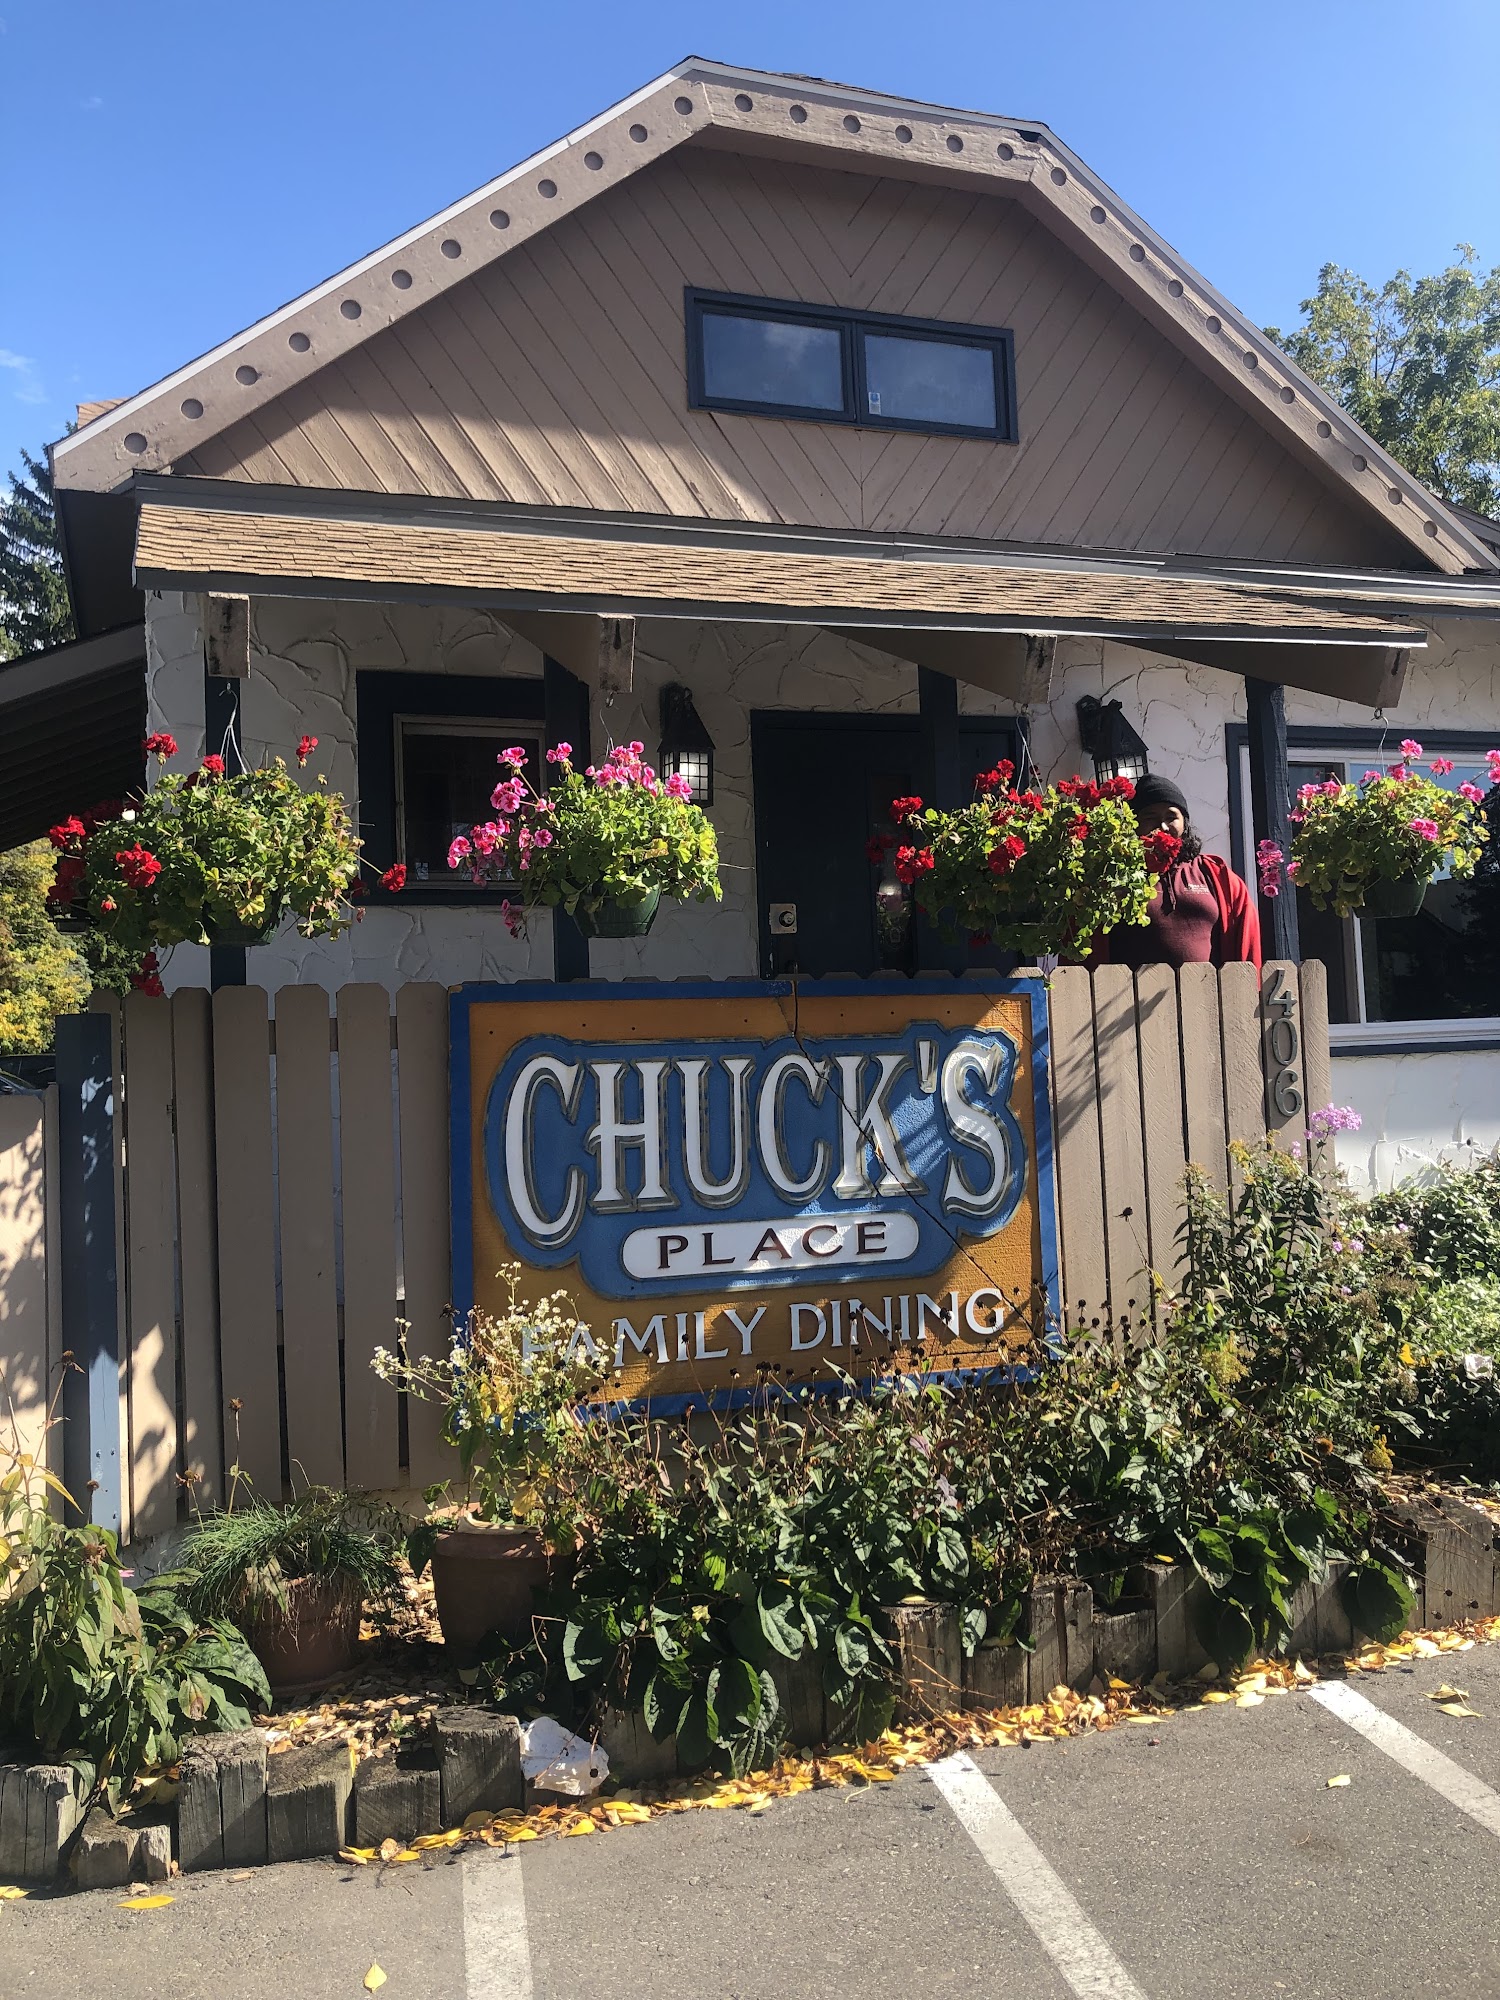 Chuck's Place Family Restaurant